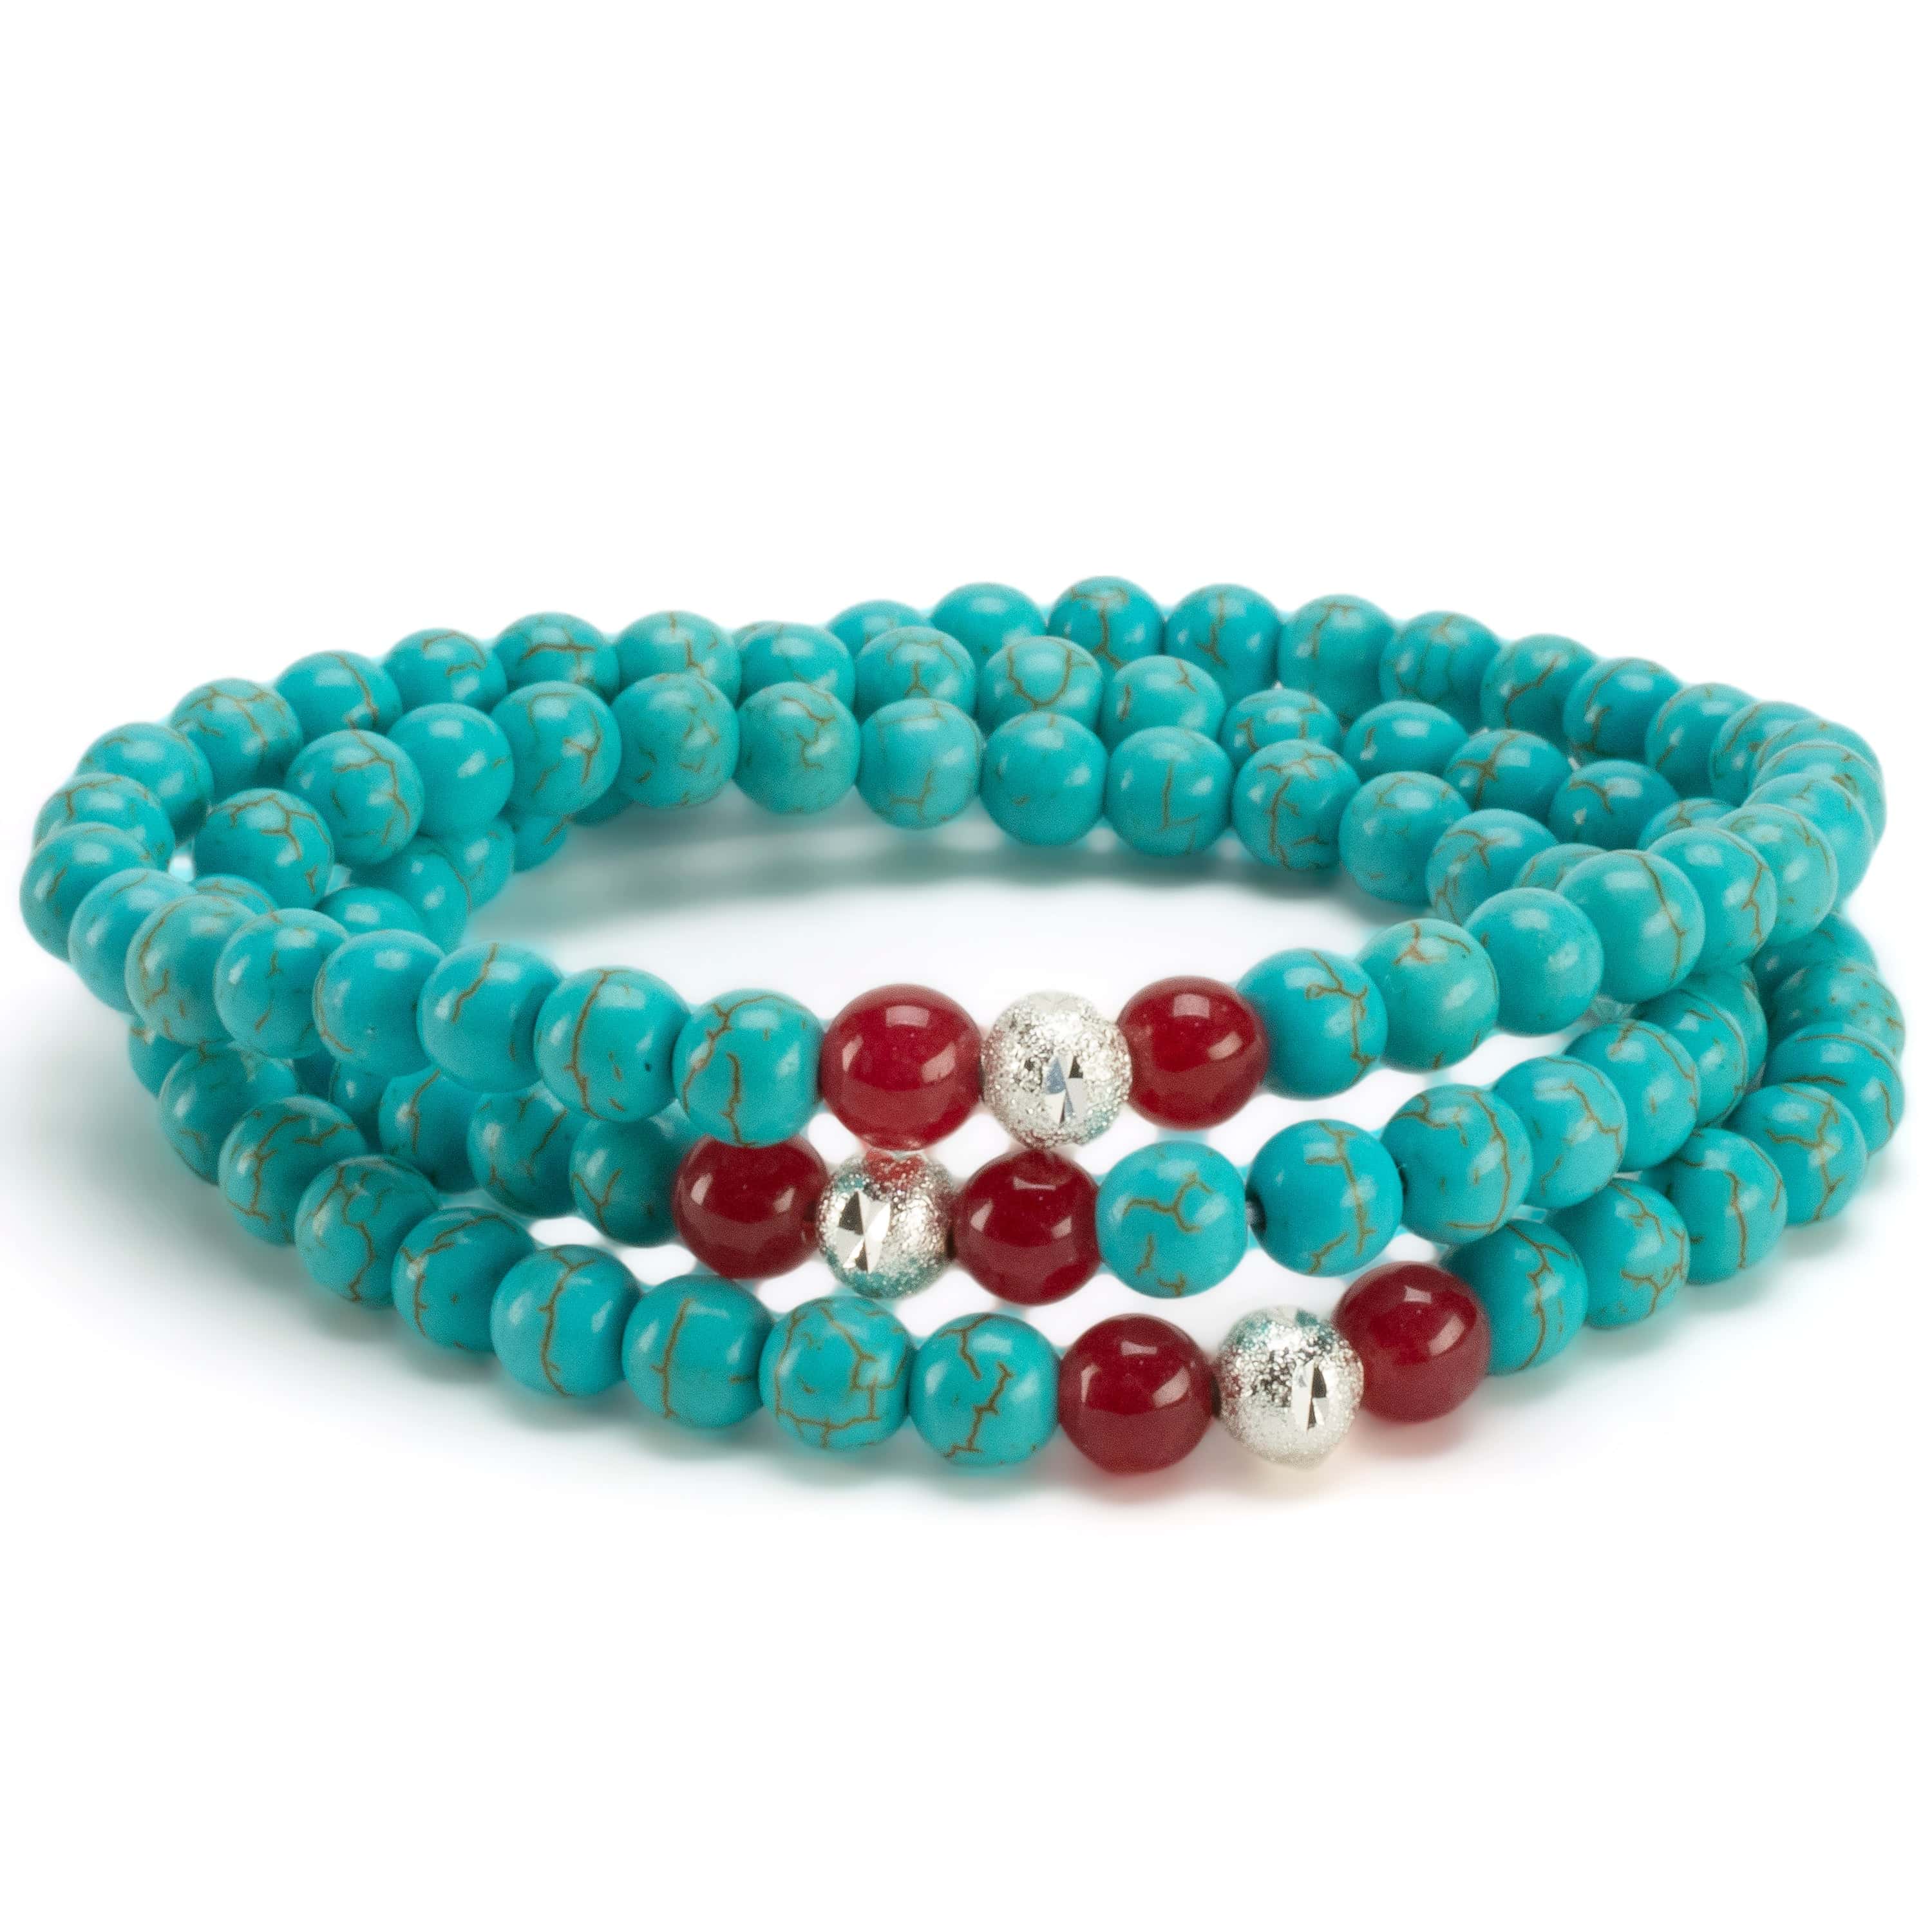 Kalifano Gemstone Bracelets Howlite Turquoise 6mm Beads with Red Agate & Silver Sparkly Accent Beads Triple Wrap Gemstone Elastic Bracelet WHITE-BGI3-088